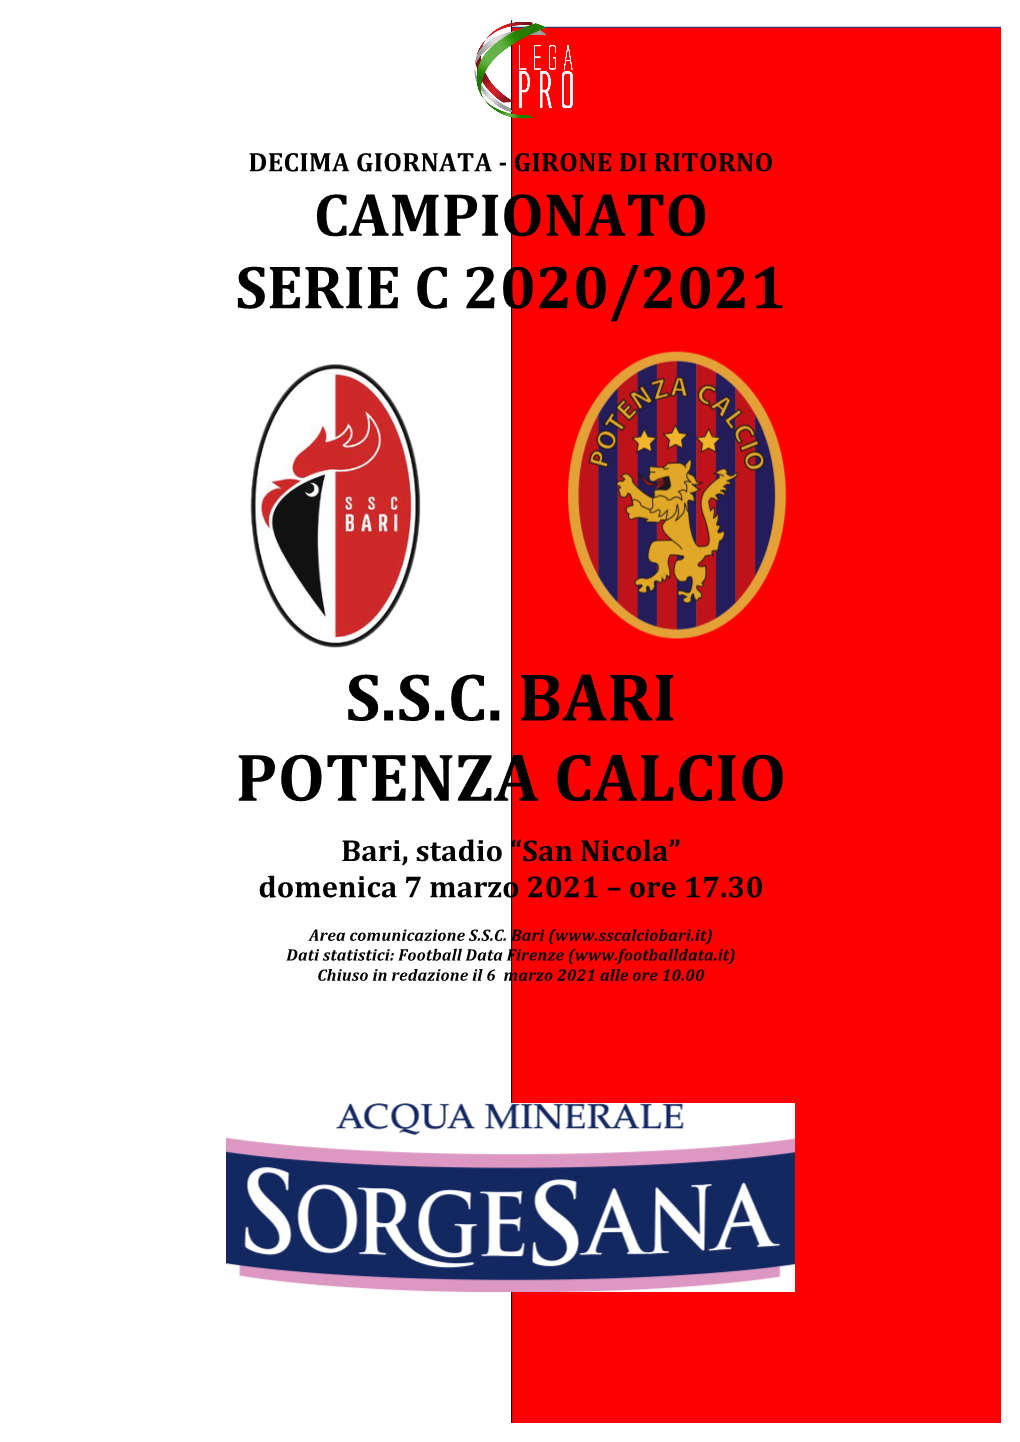 S.S.C. Bari Potenza Calcio